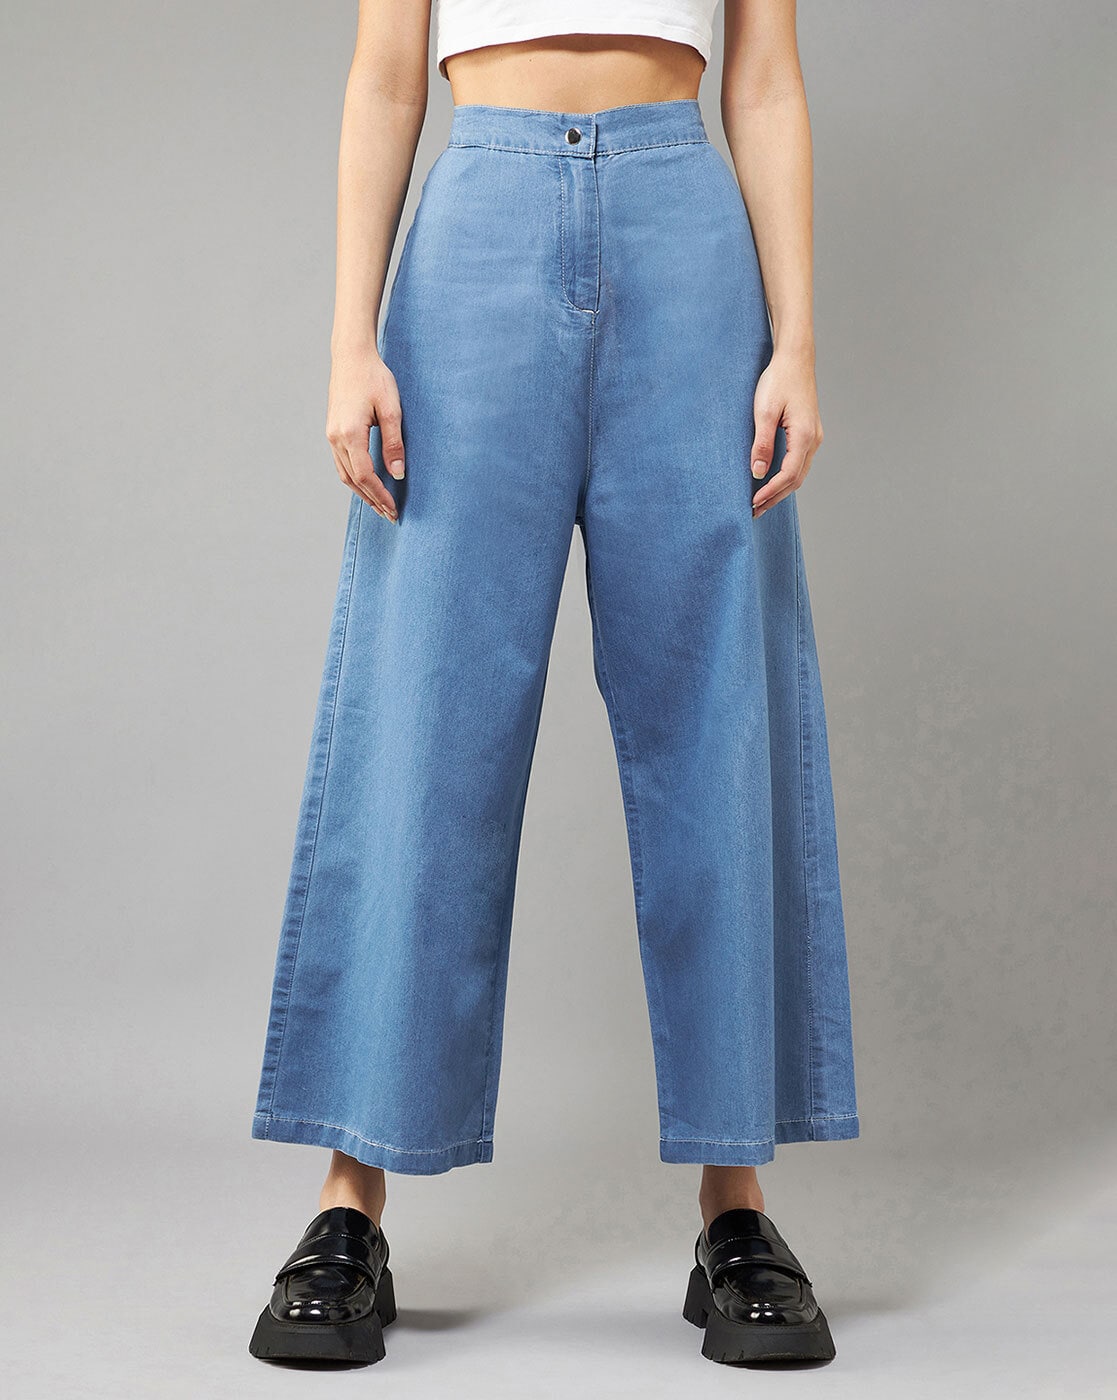 Blue wide leg denim jeans for fall outfits | THE PINK DESERT – Pink Desert